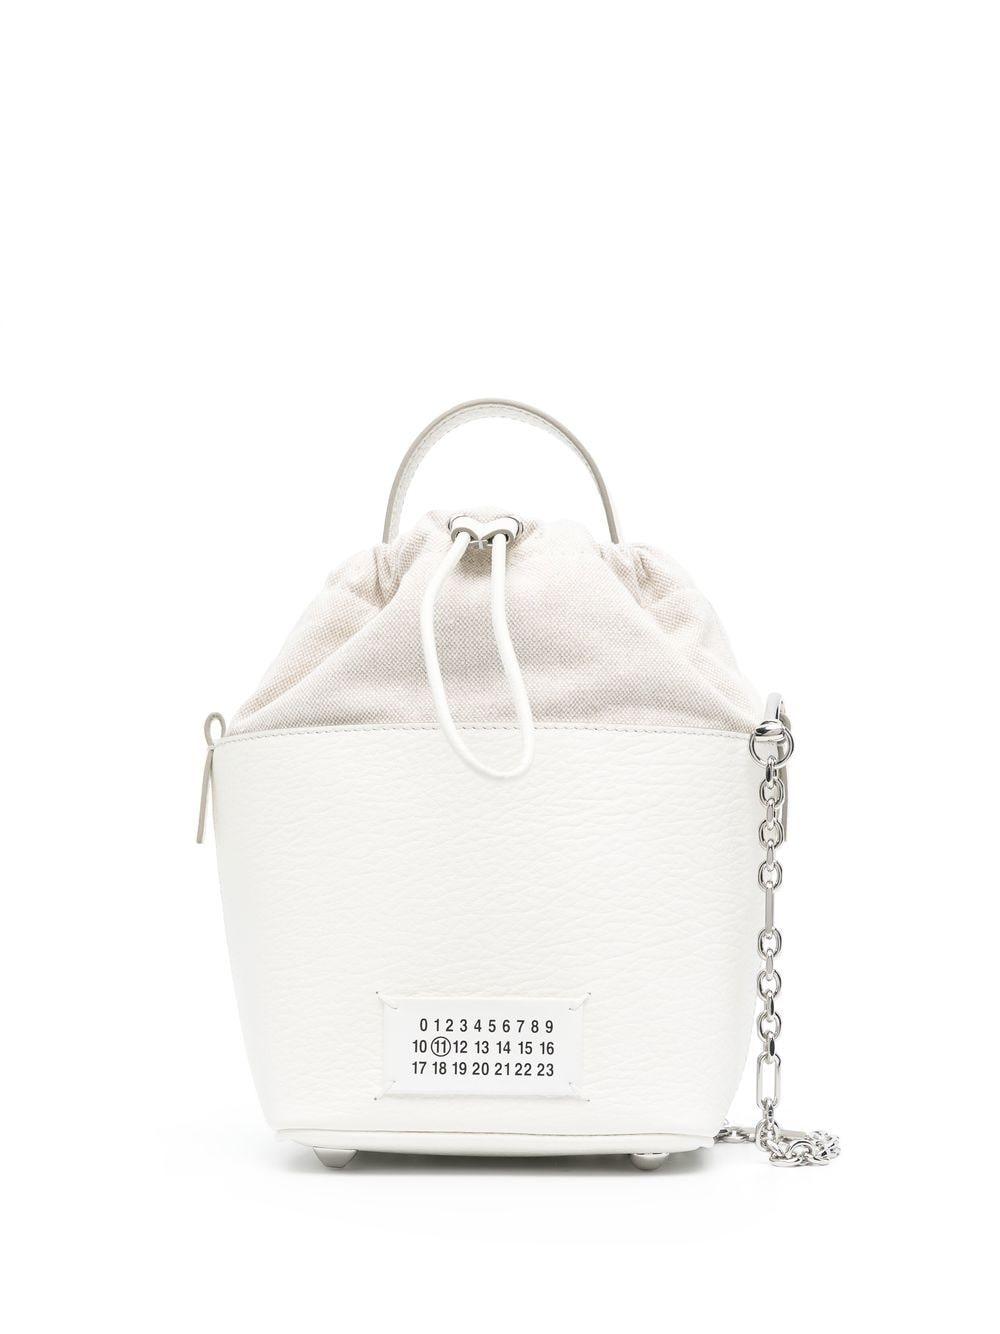 Maison Margiela 5ac Leather Bucket Bag in White | Lyst